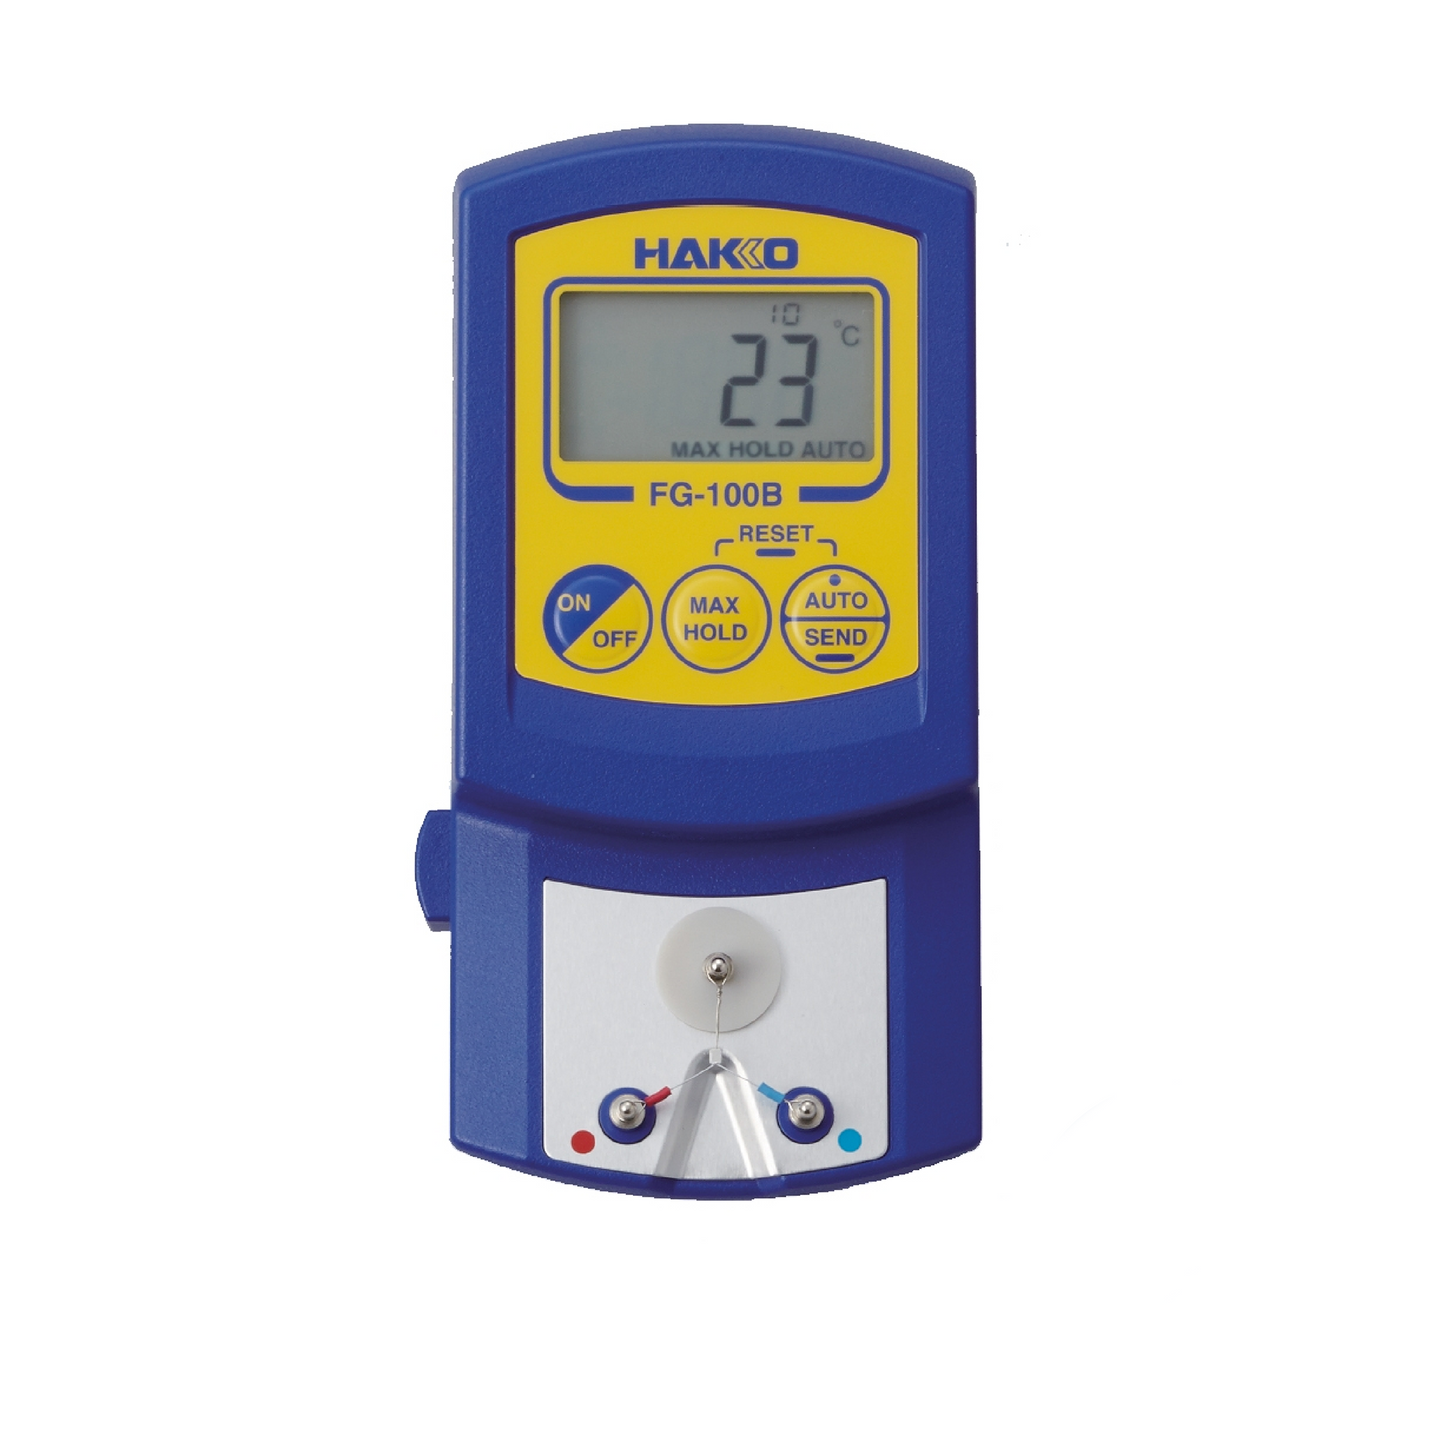 Hakko_ FG100B-52 Thermometer_ Soldering Related Equipment and Materials_ Hakko Products